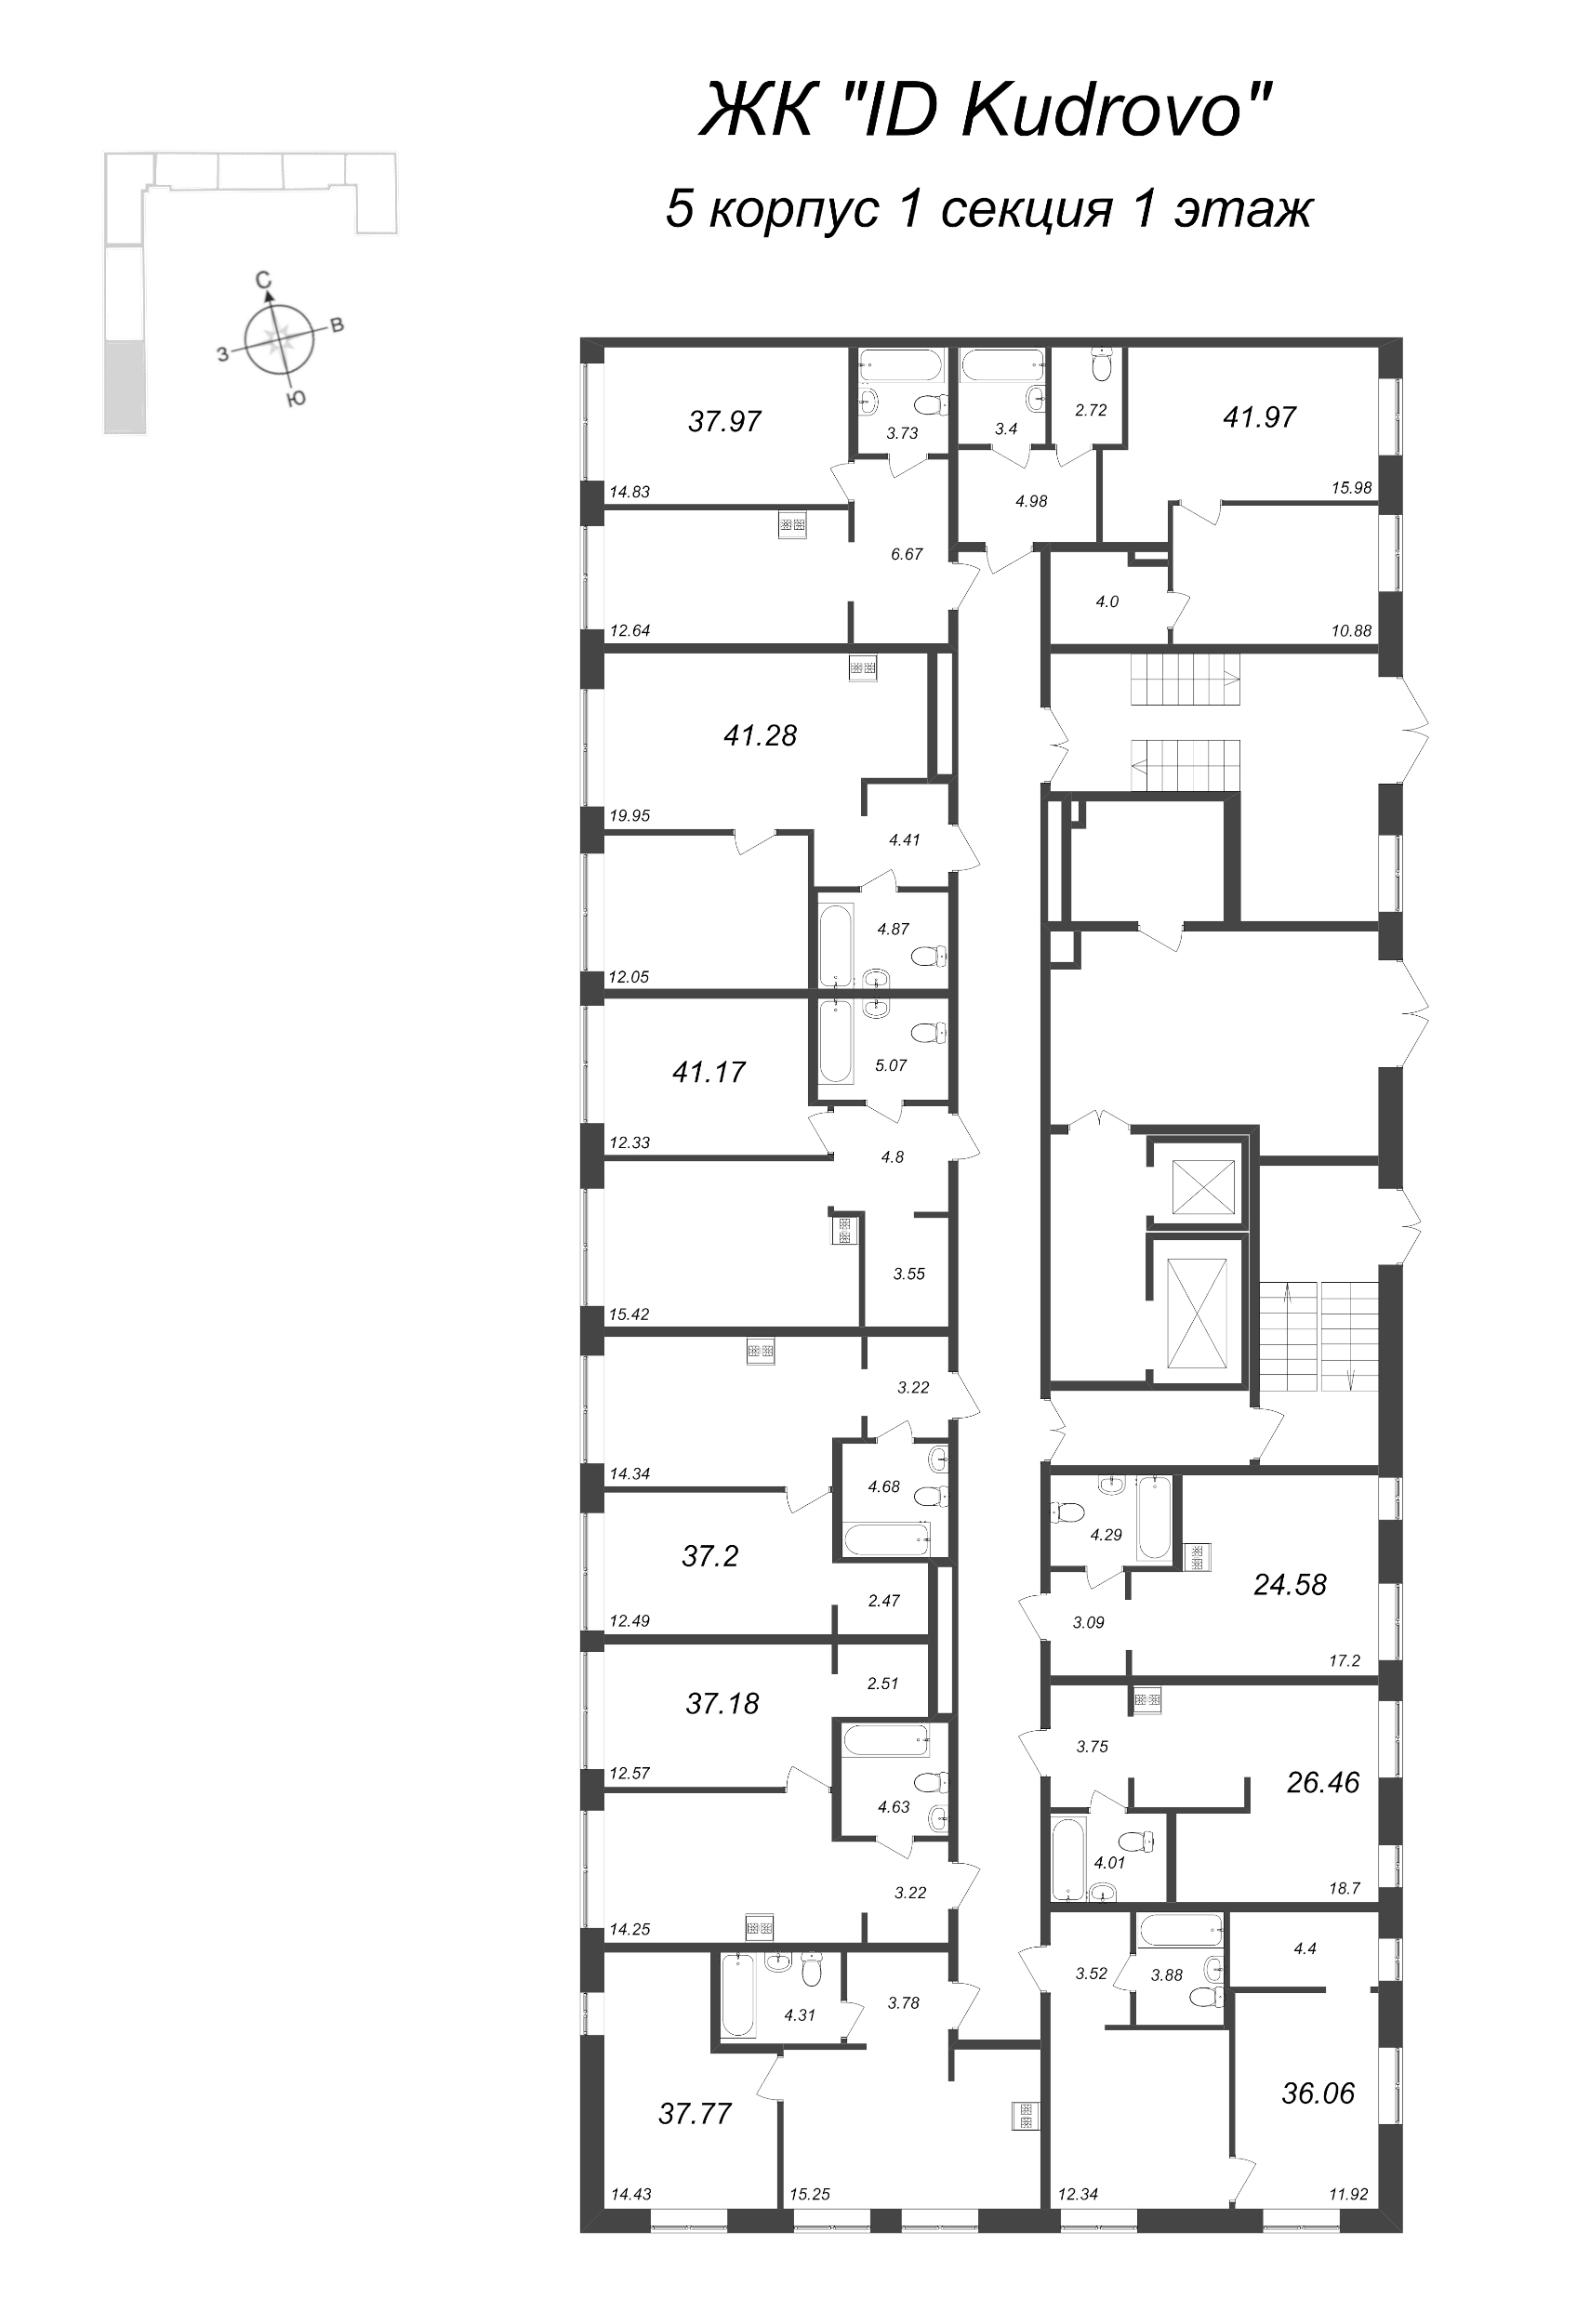 1-комнатная квартира, 37.97 м² в ЖК "ID Kudrovo" - планировка этажа